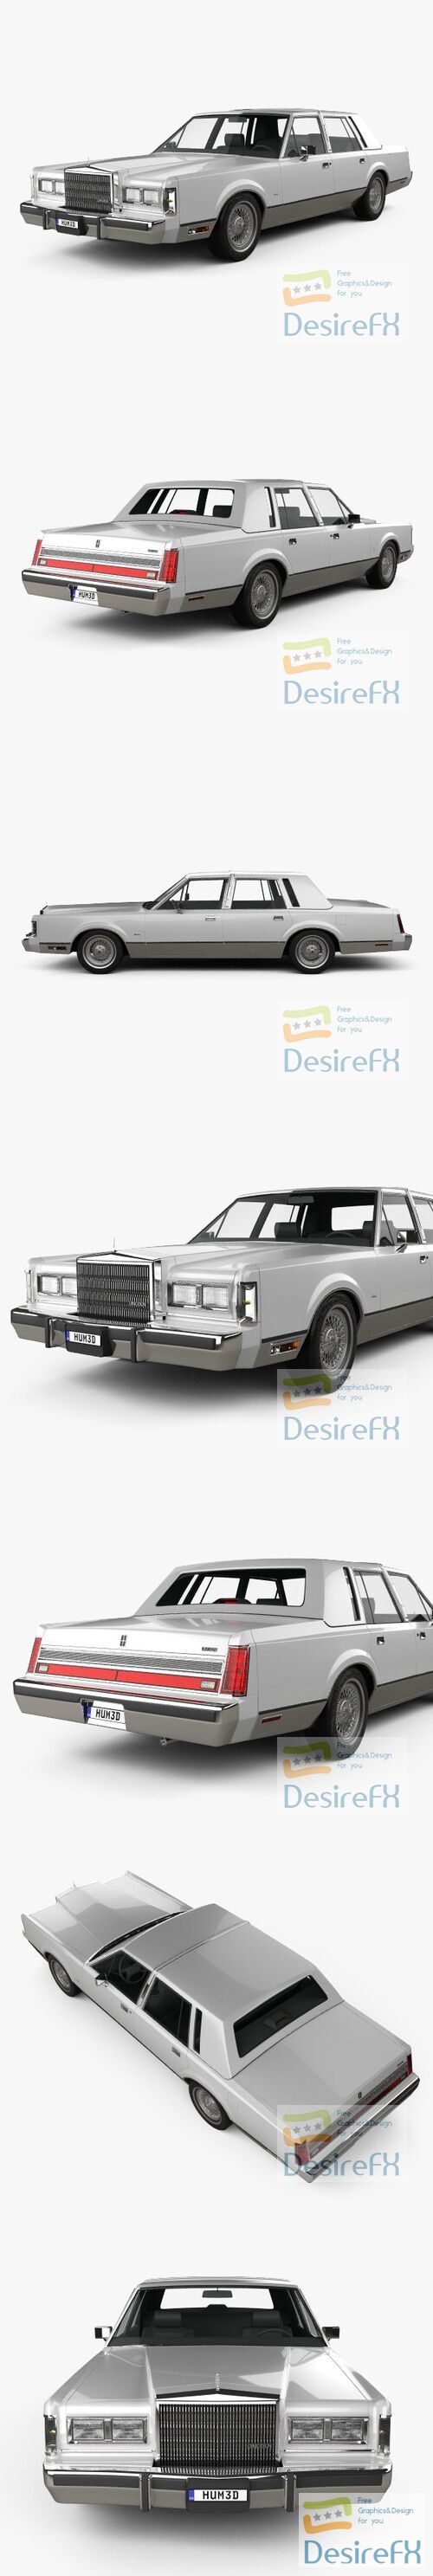 Lincoln Town Car 1989 3D Model